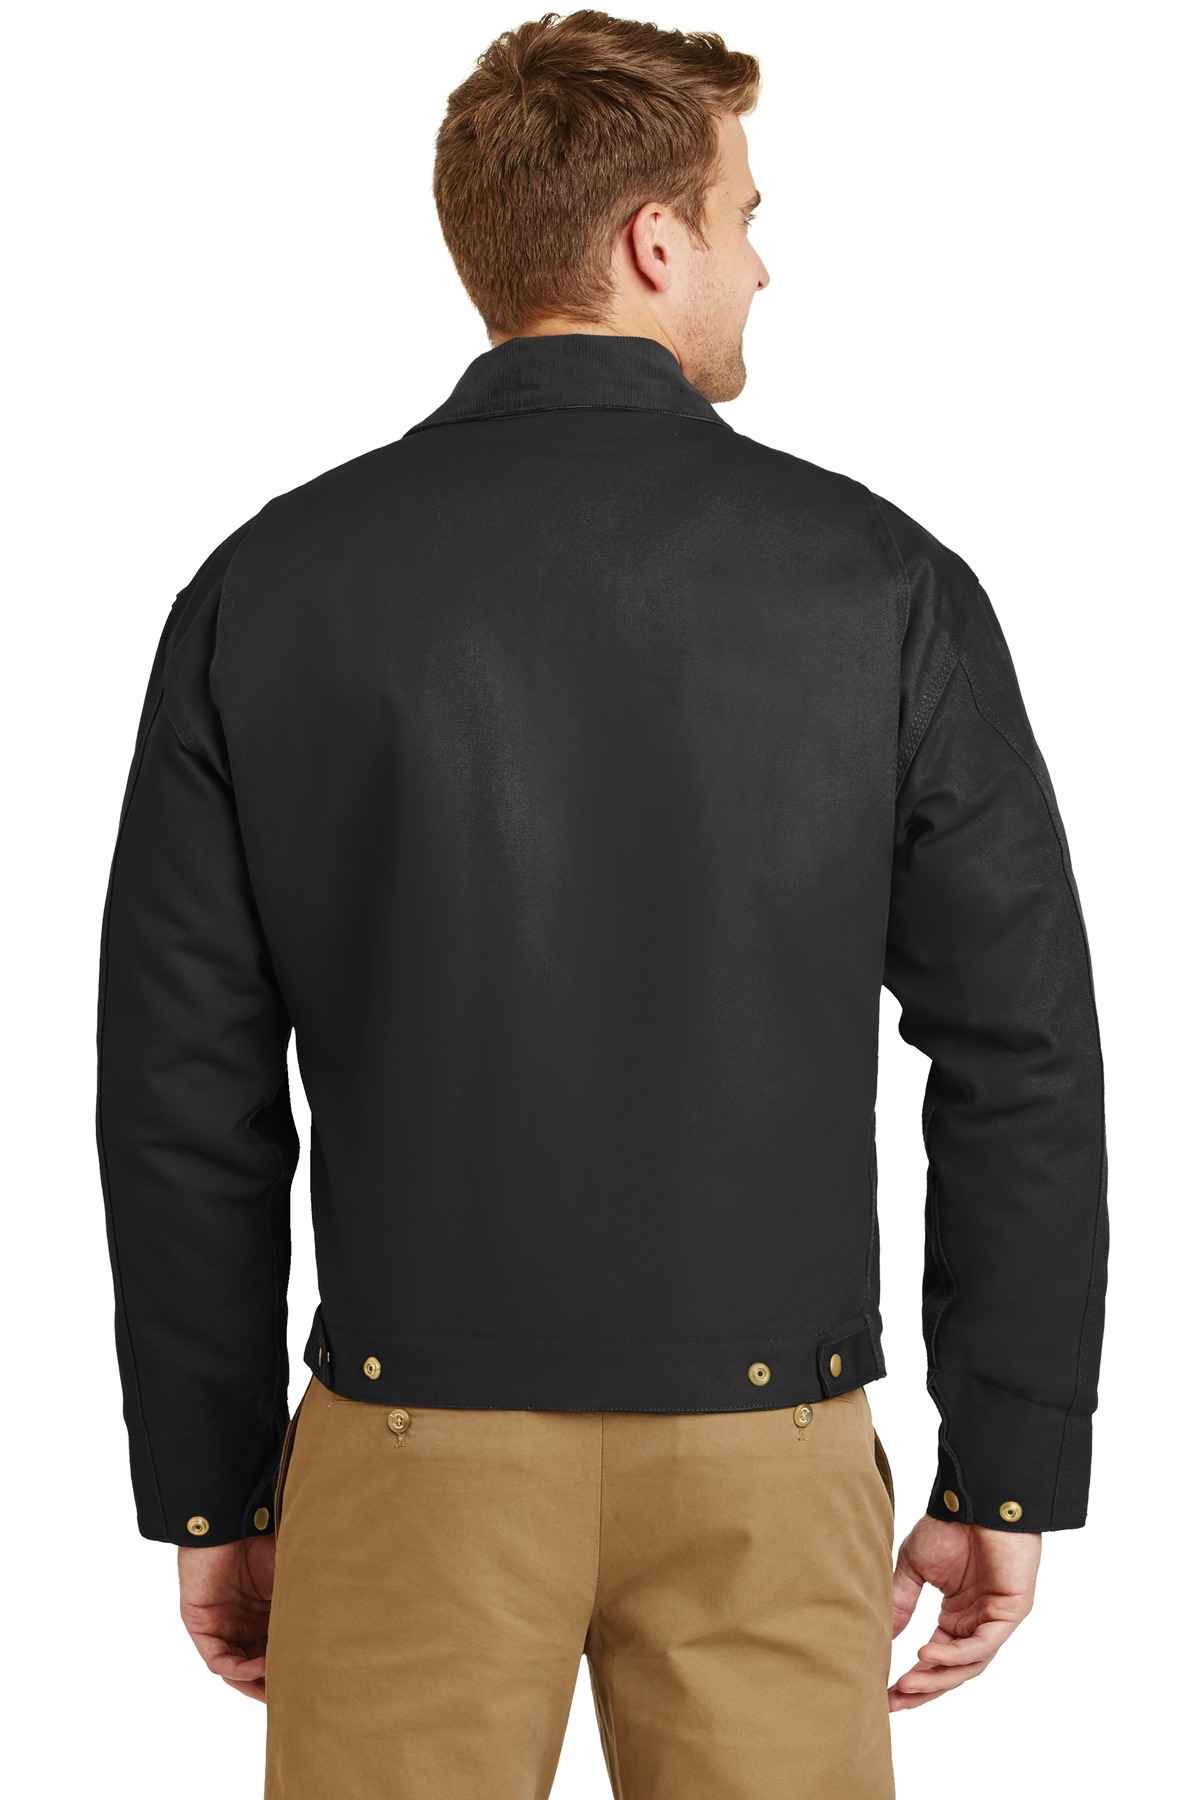 CornerStone Duck Cloth Work Jacket-S (Navy/Black) - Walmart.com